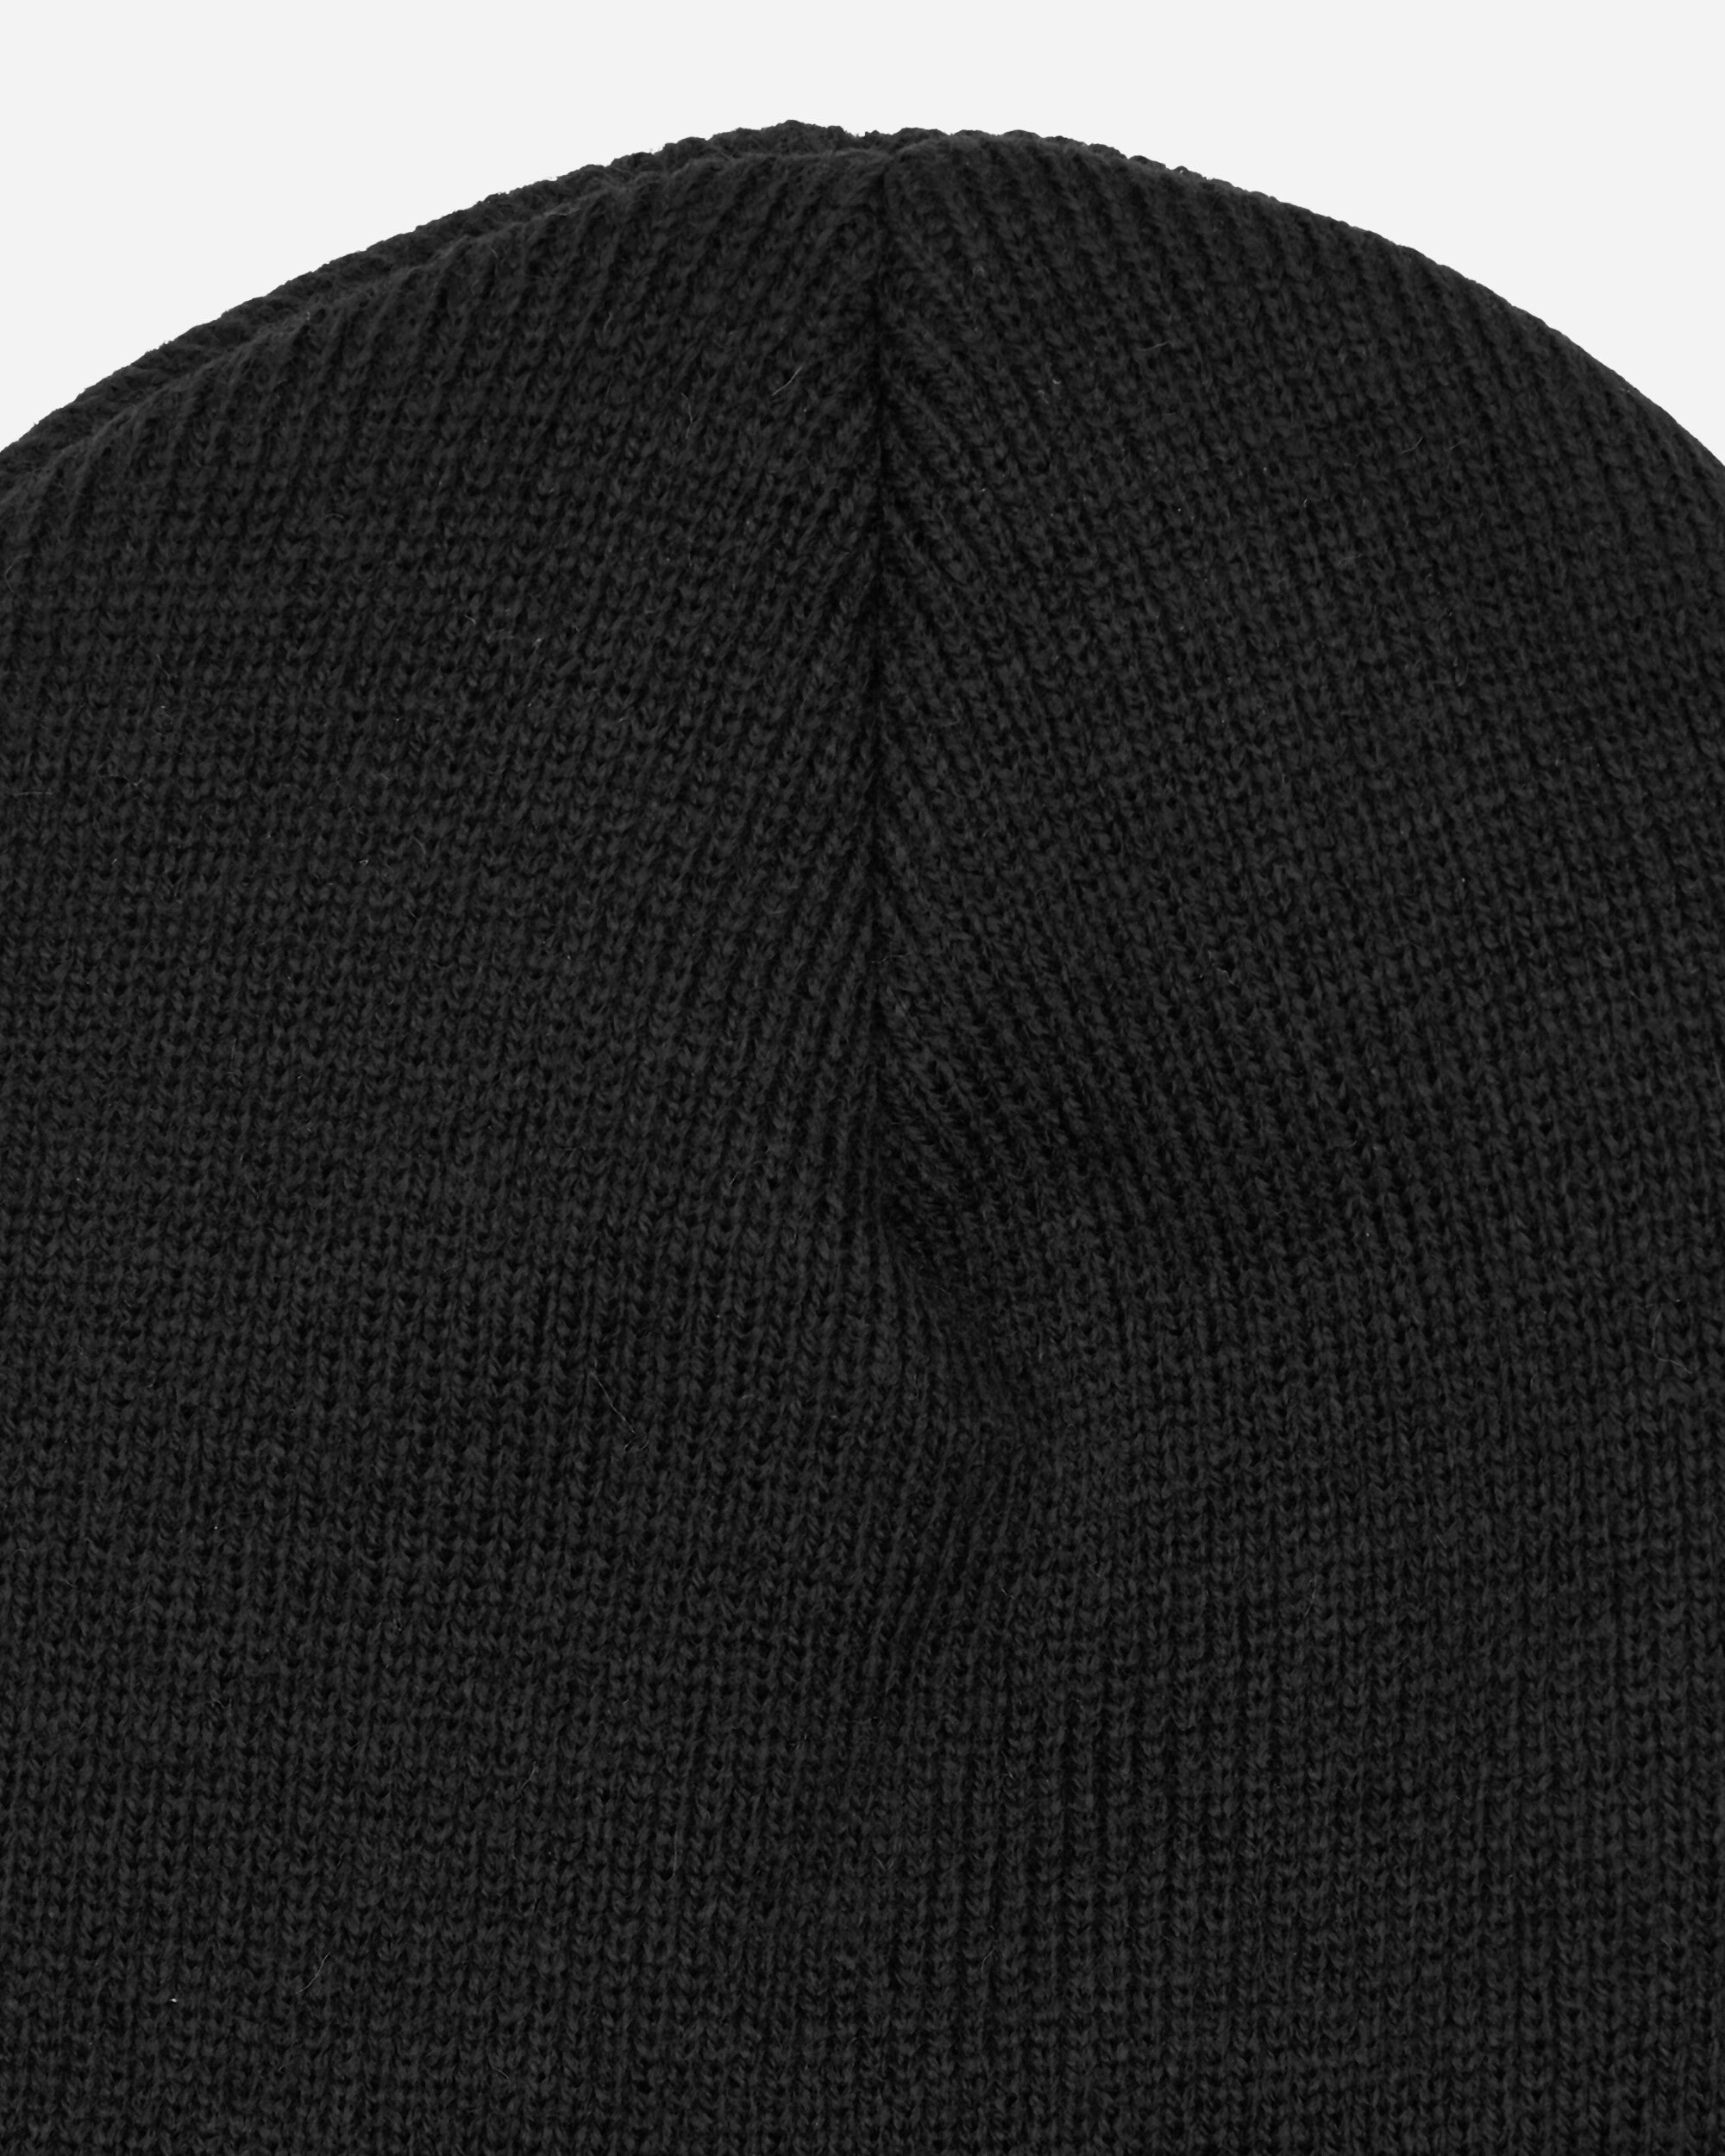 Stüssy Stock Cuff Beanie Black Hats Beanies 1321020 BLAC